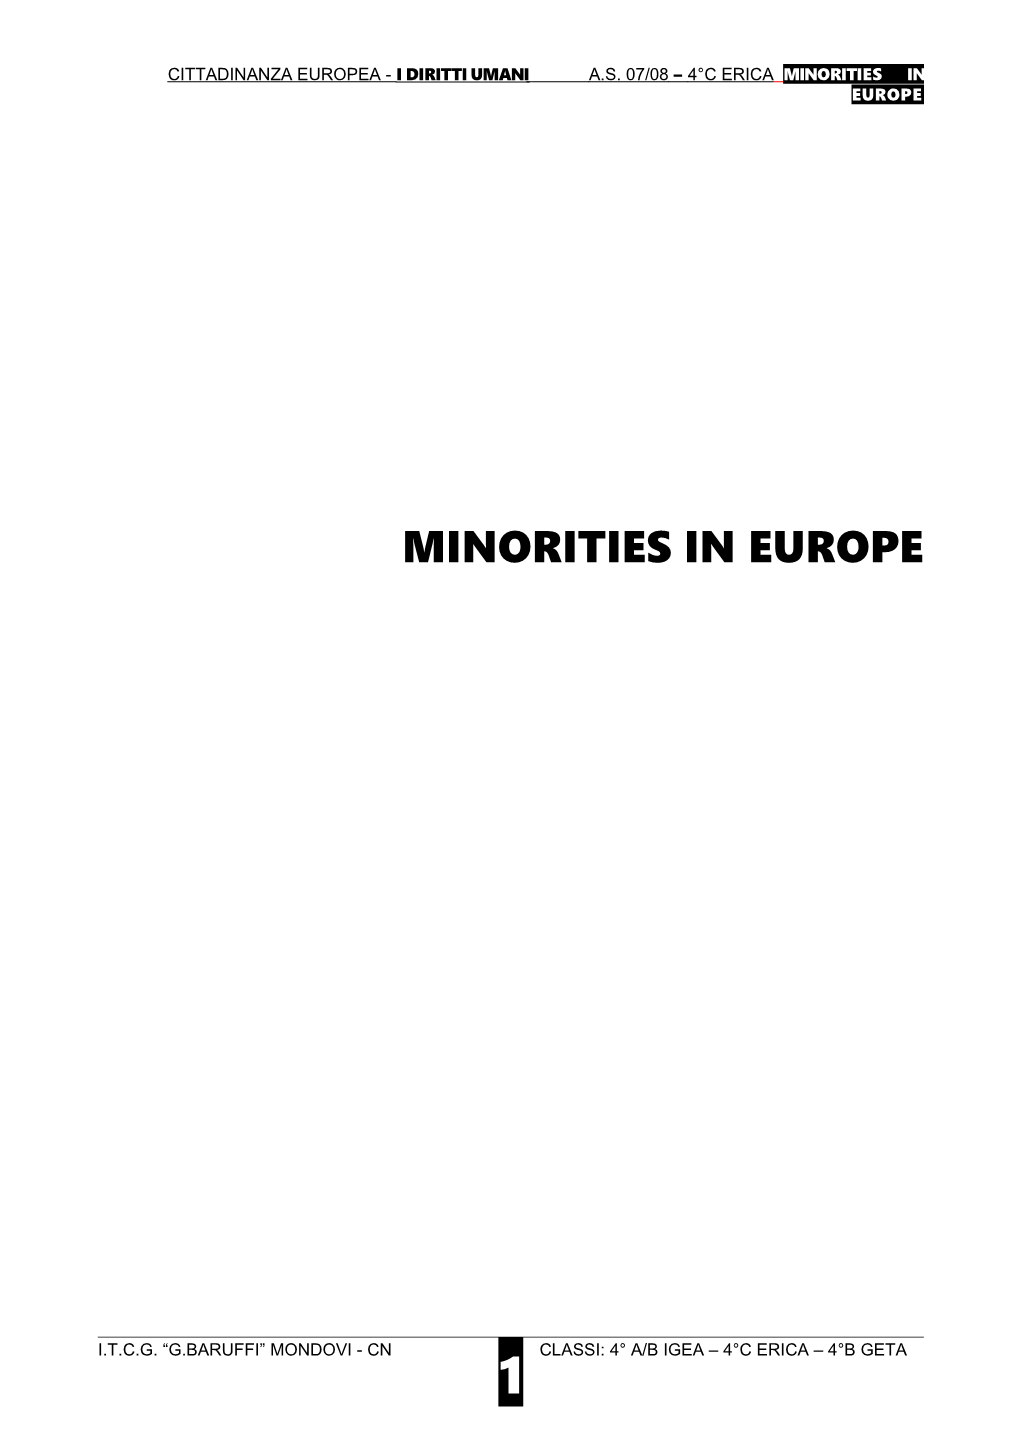 Minorities in Europe